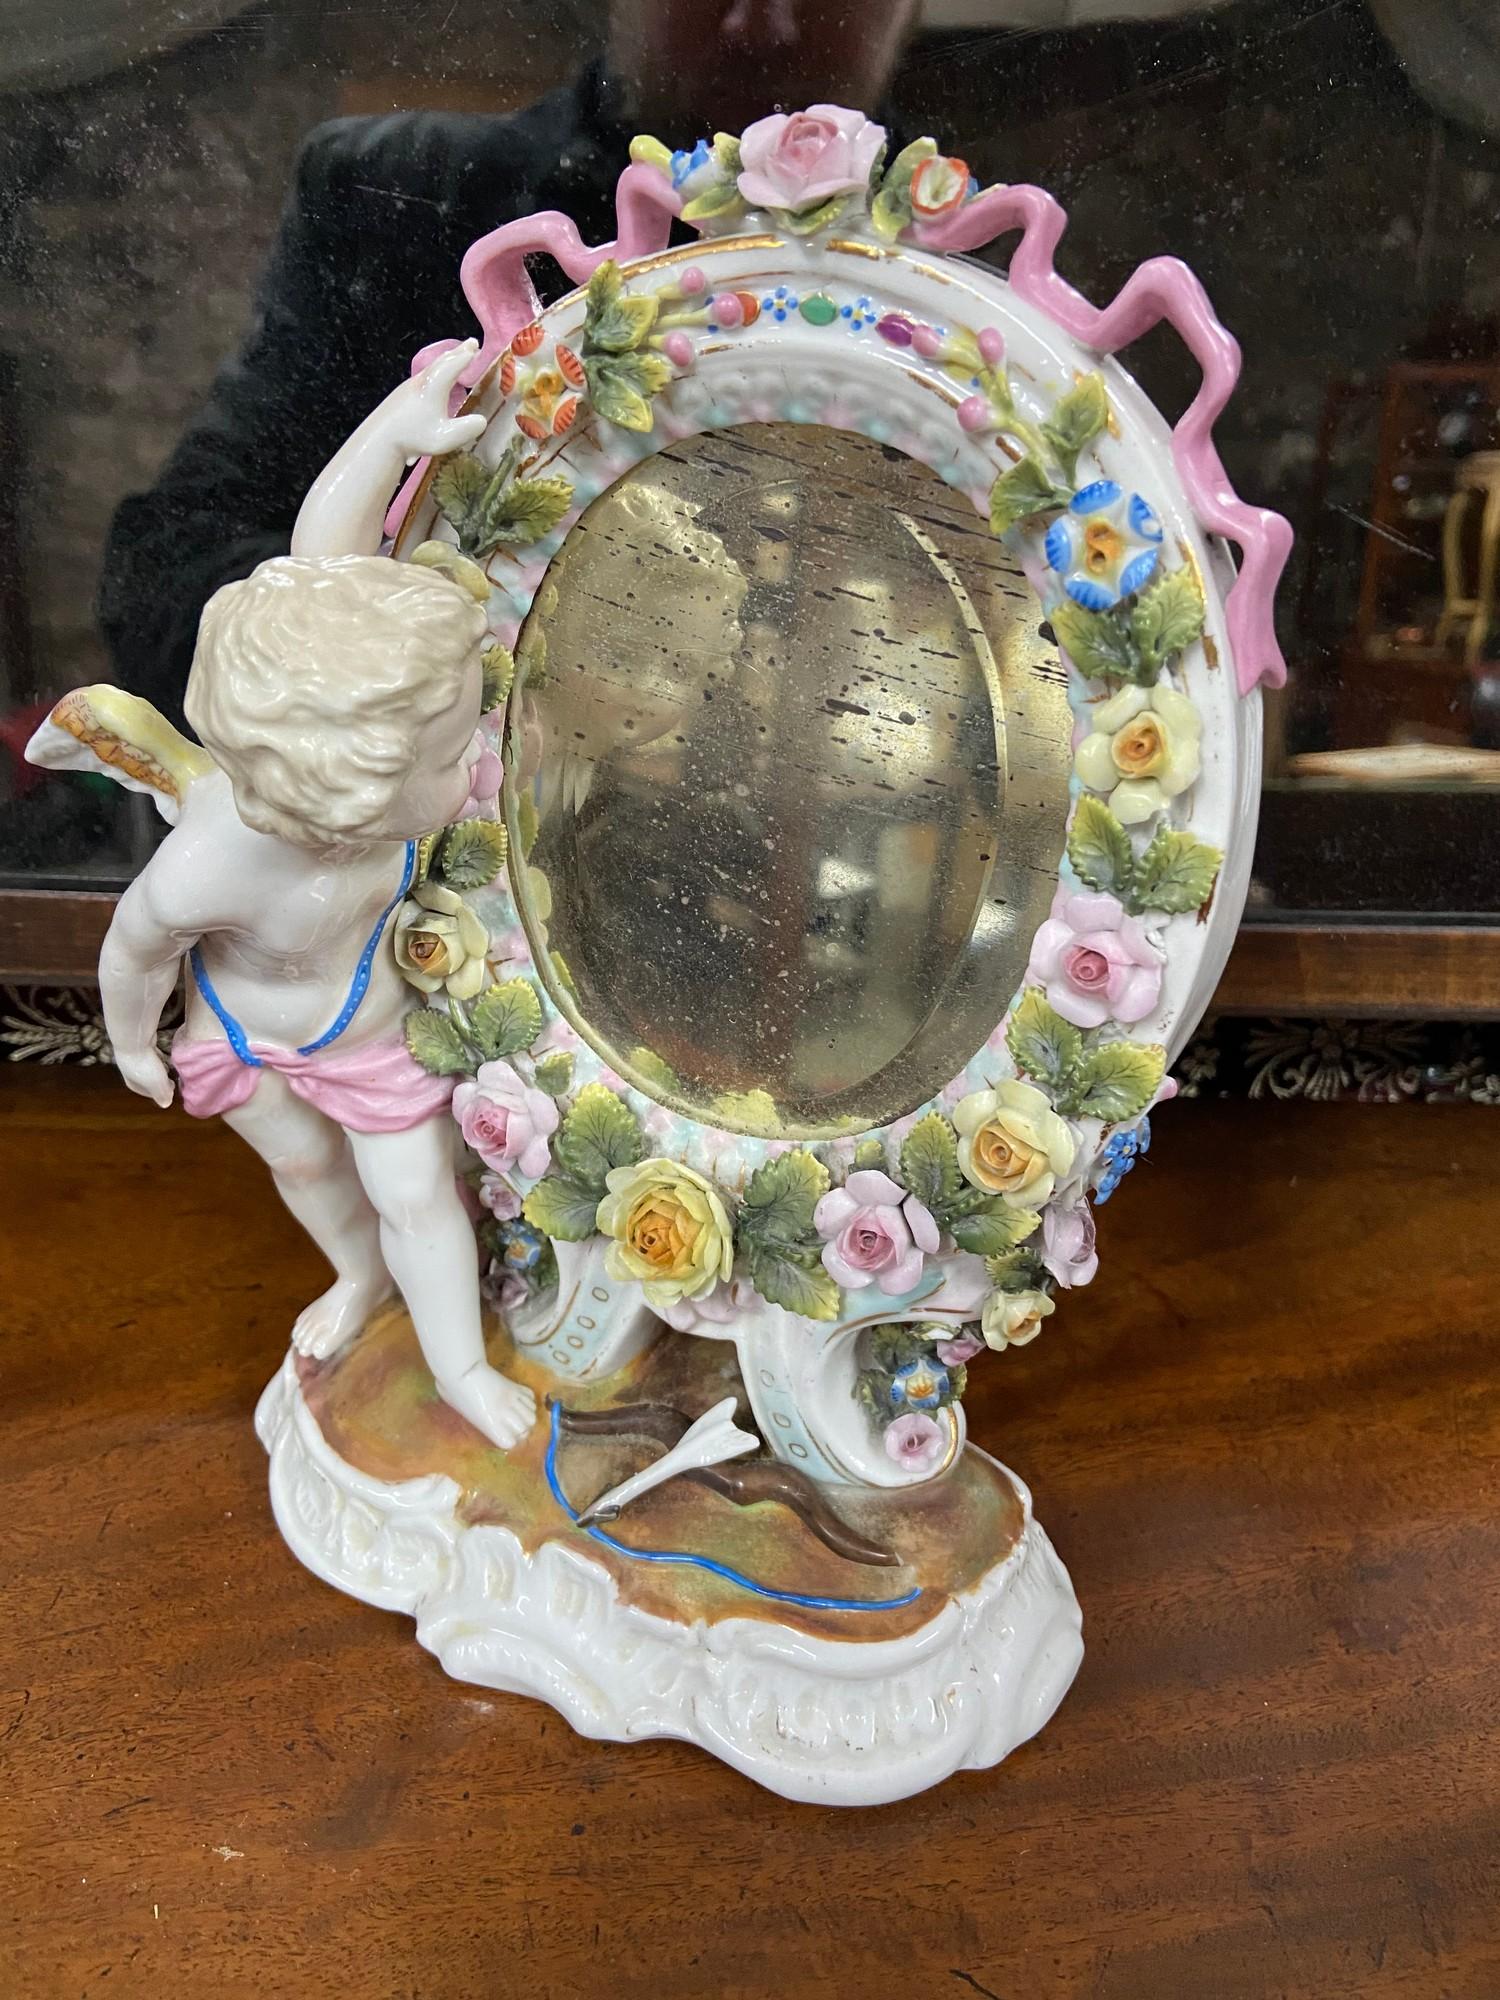 A 19th century Sitzendorf Cherub and floral design mirror. [